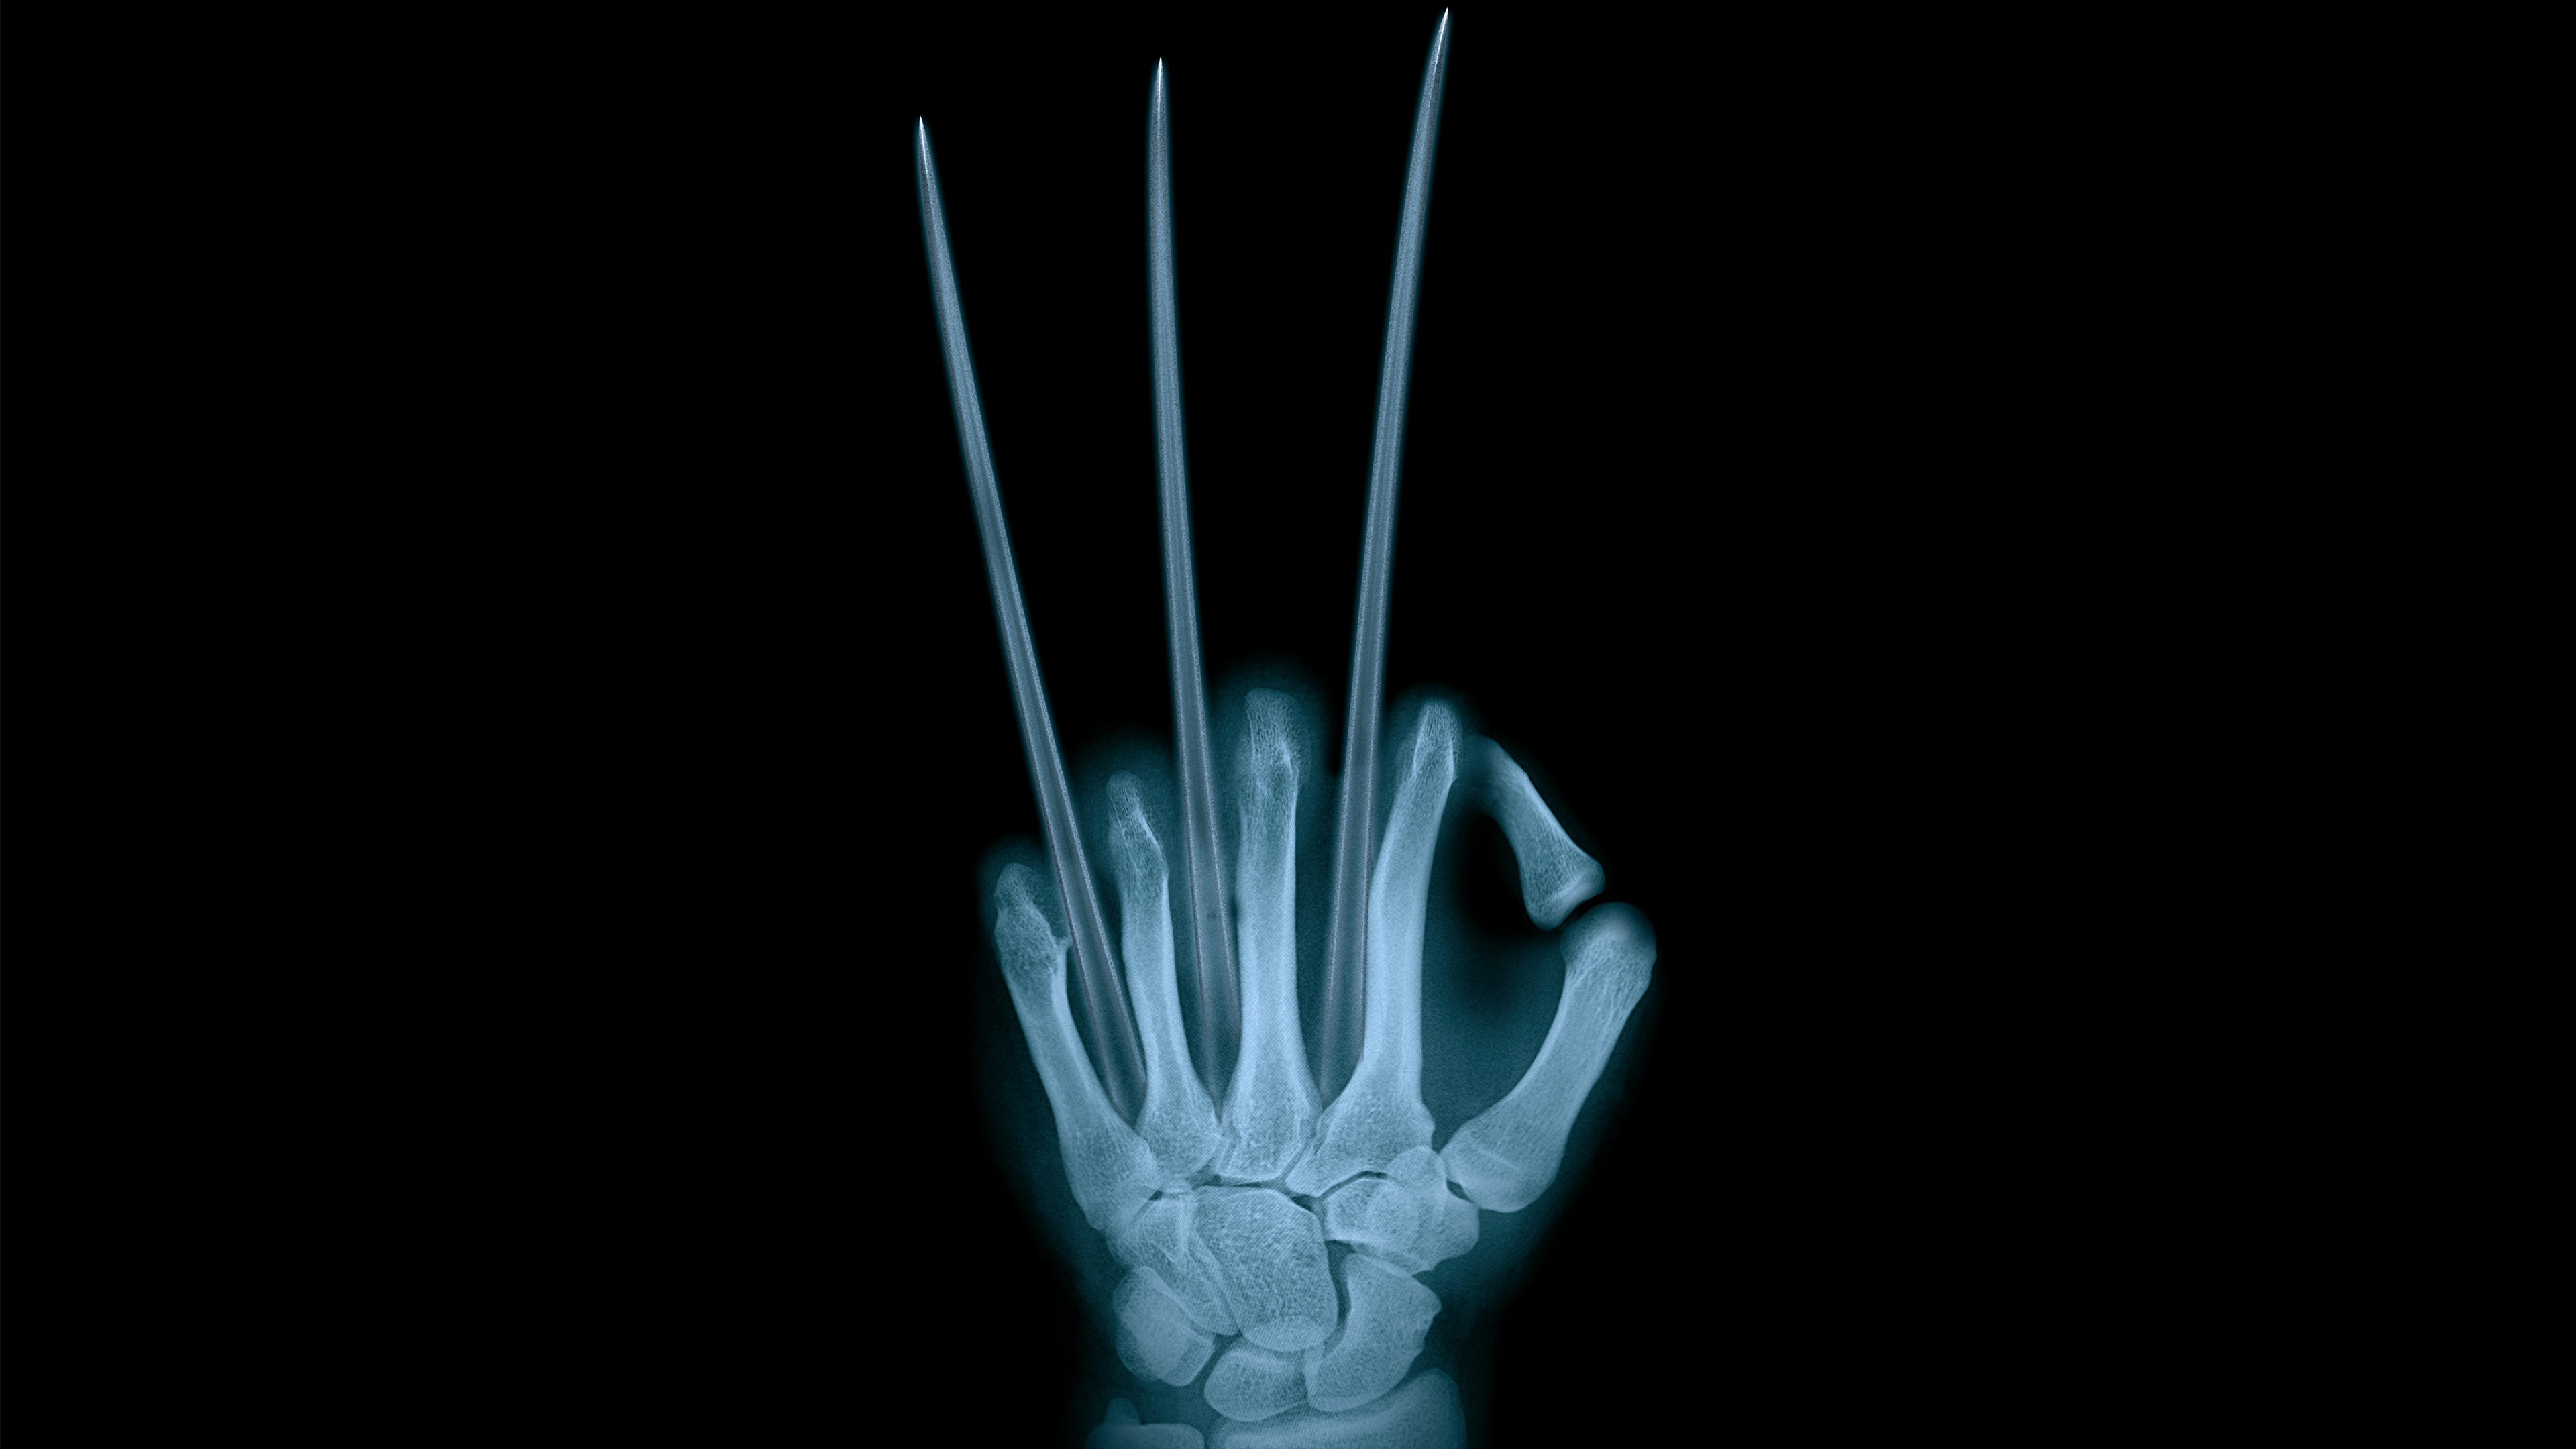 x ray wallpaper, radiography, x ray, medical, hand, still life photography